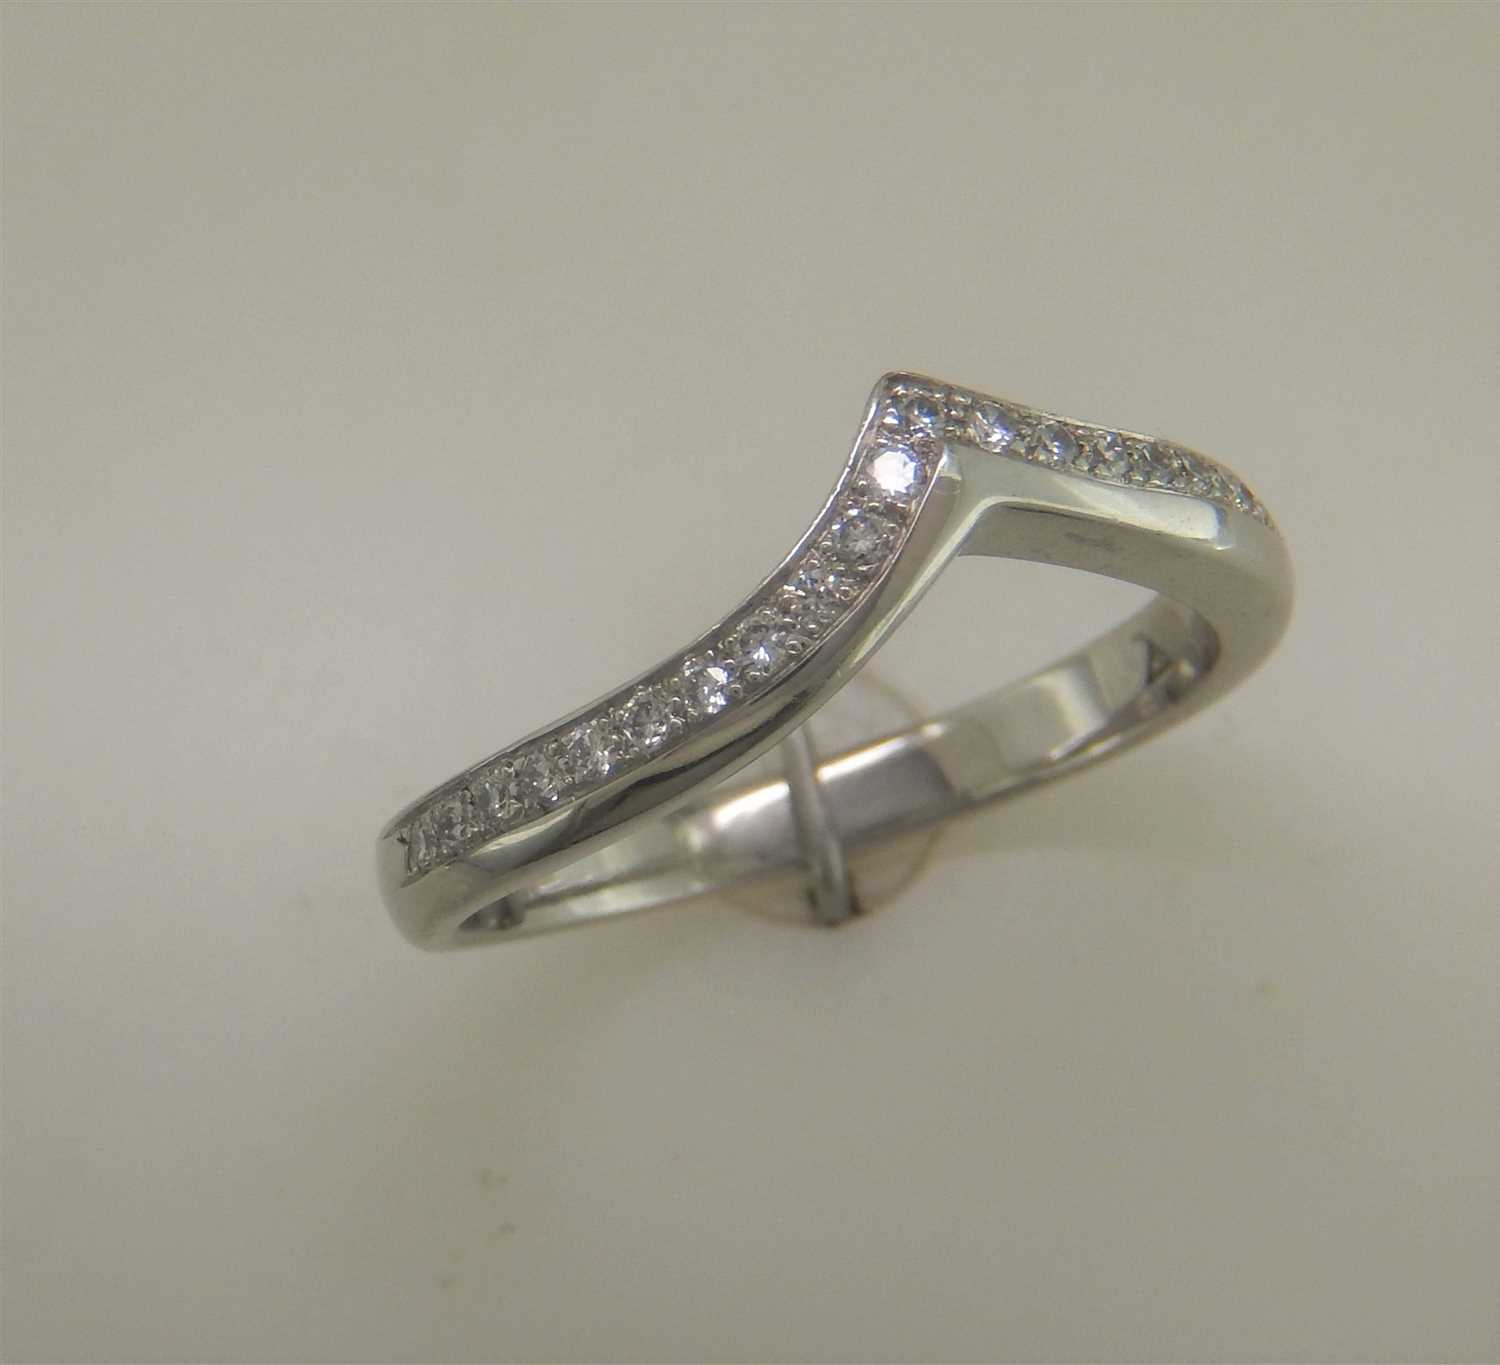 Lot 186 - Diamond shaped ring